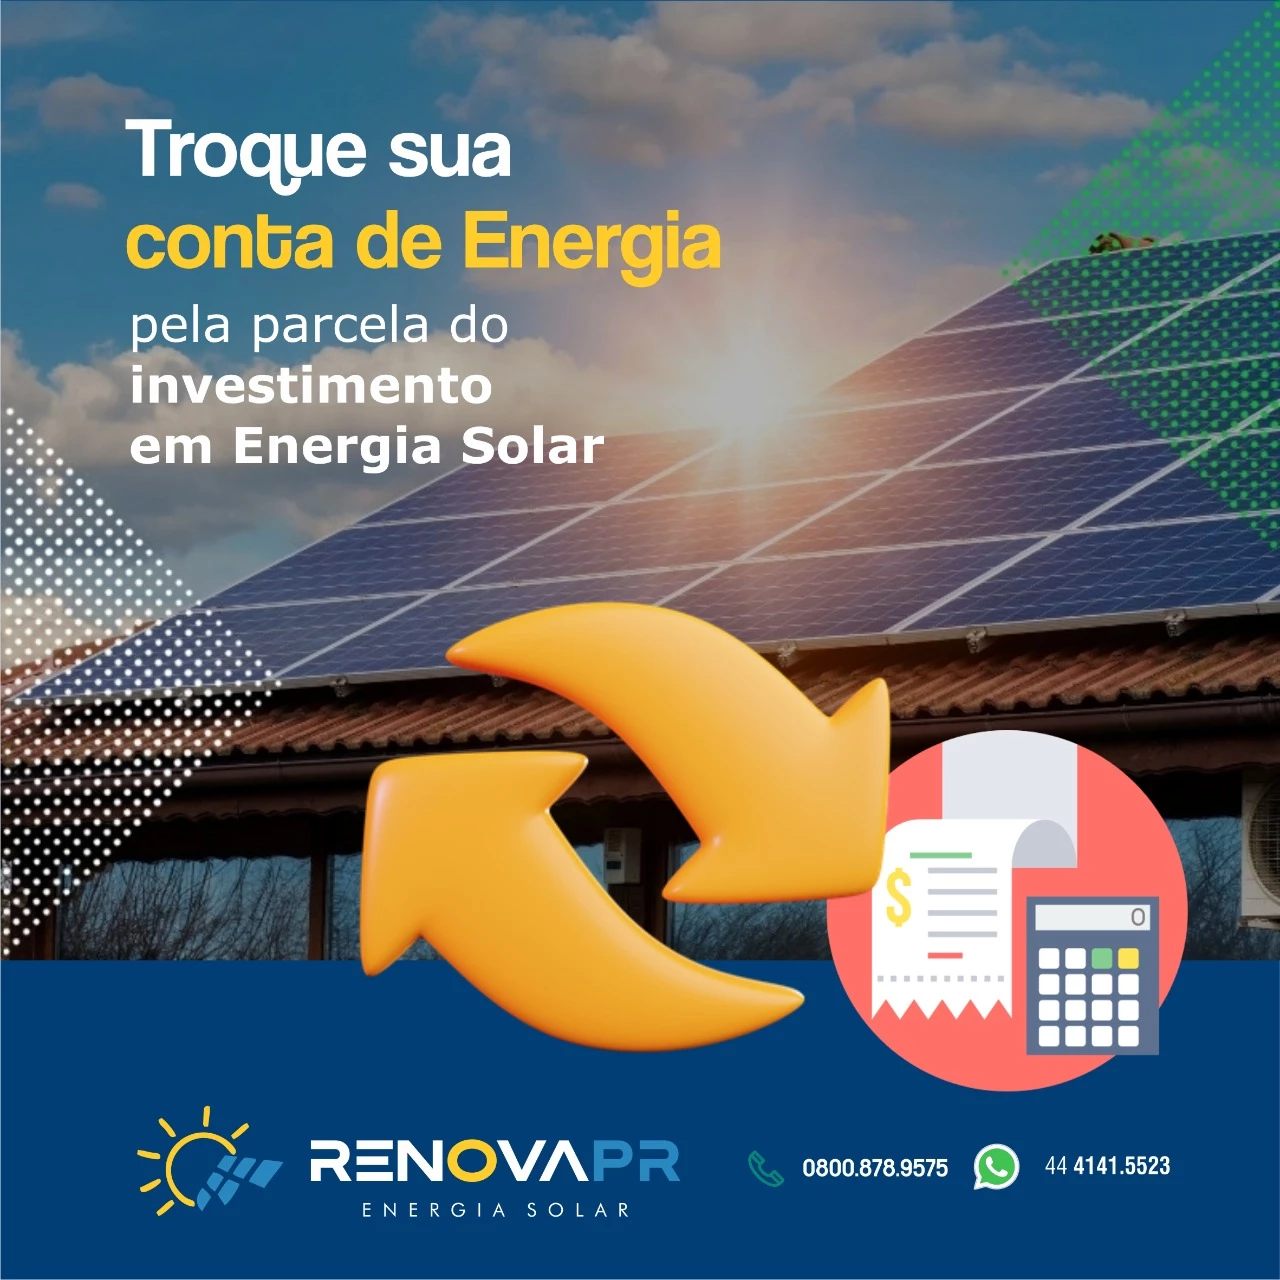 
Propaganda Plano de Energia Solar



